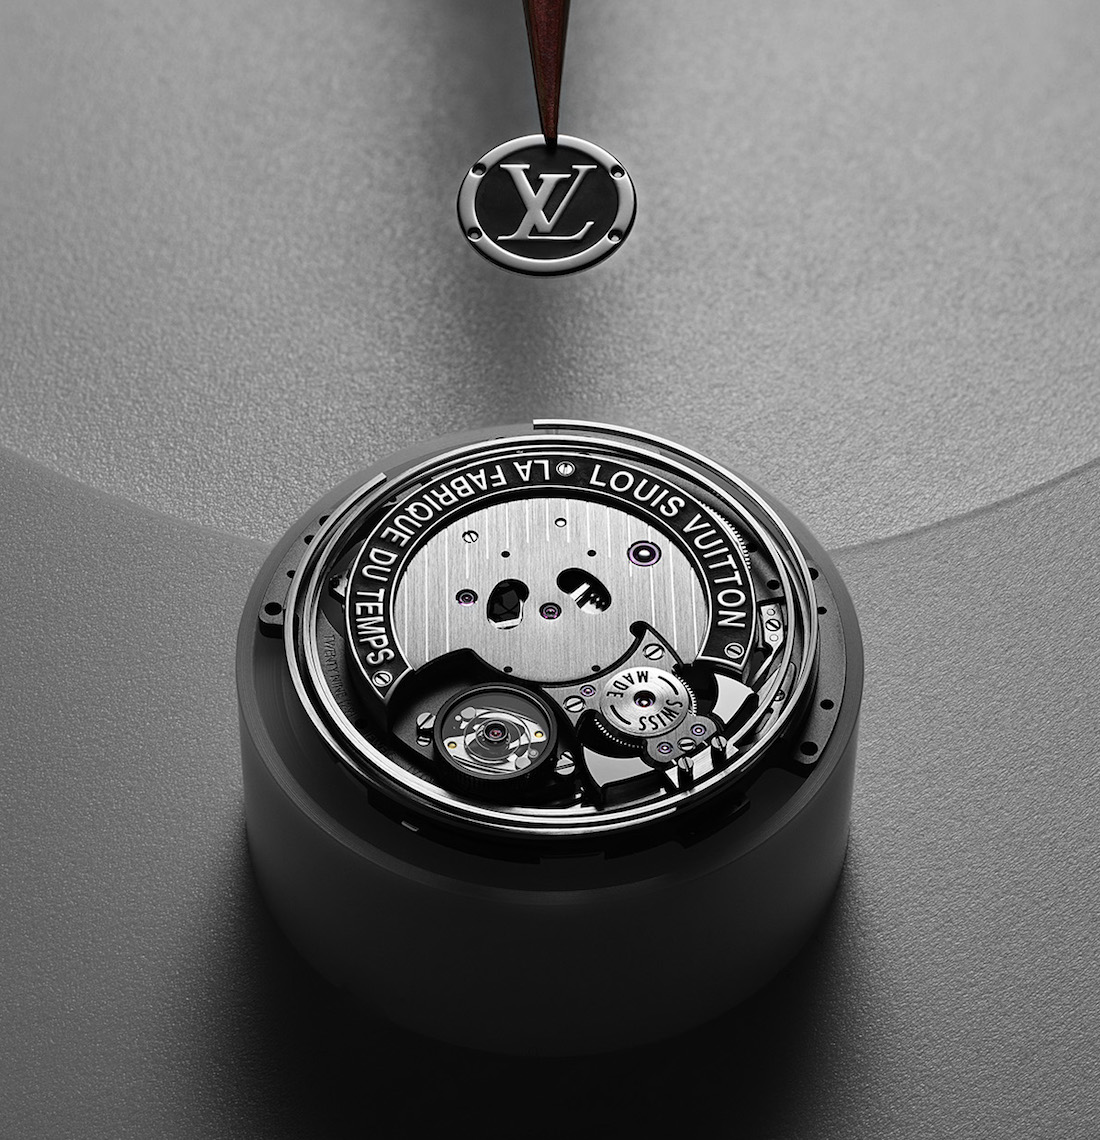 Louis Vuitton Reveals New Voyager GMT Watch